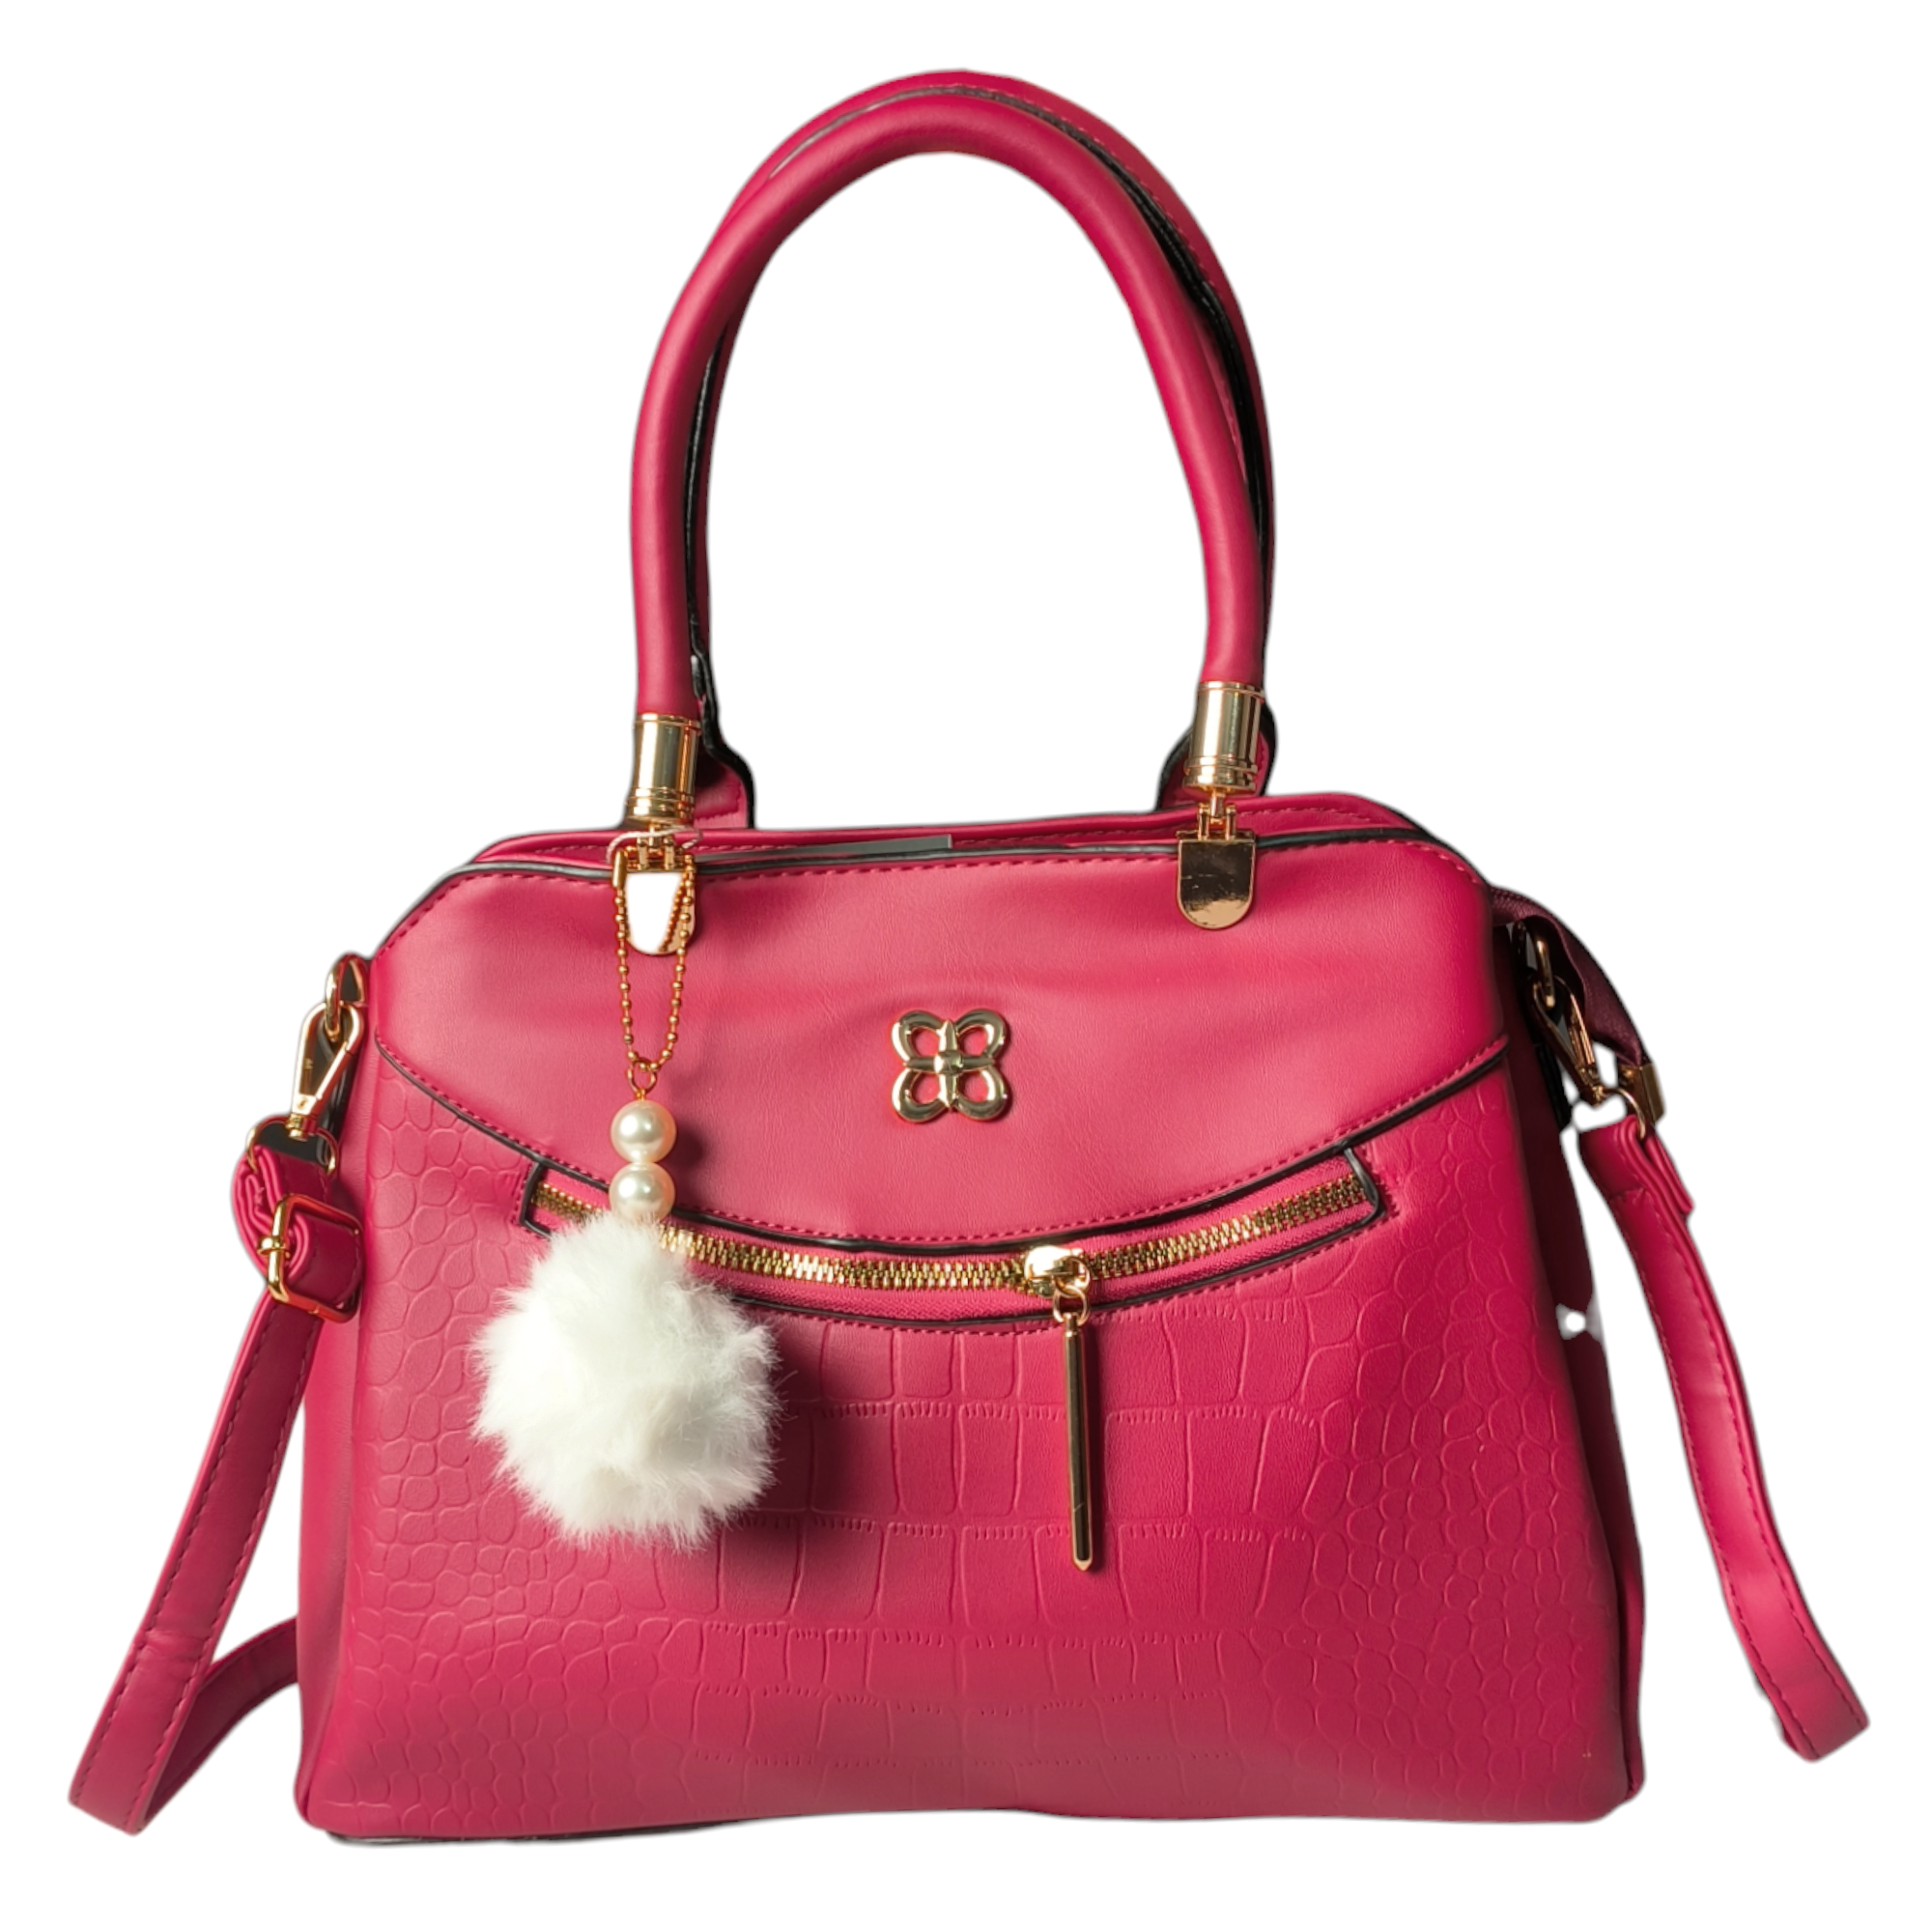 Shireen handbag for girls latest